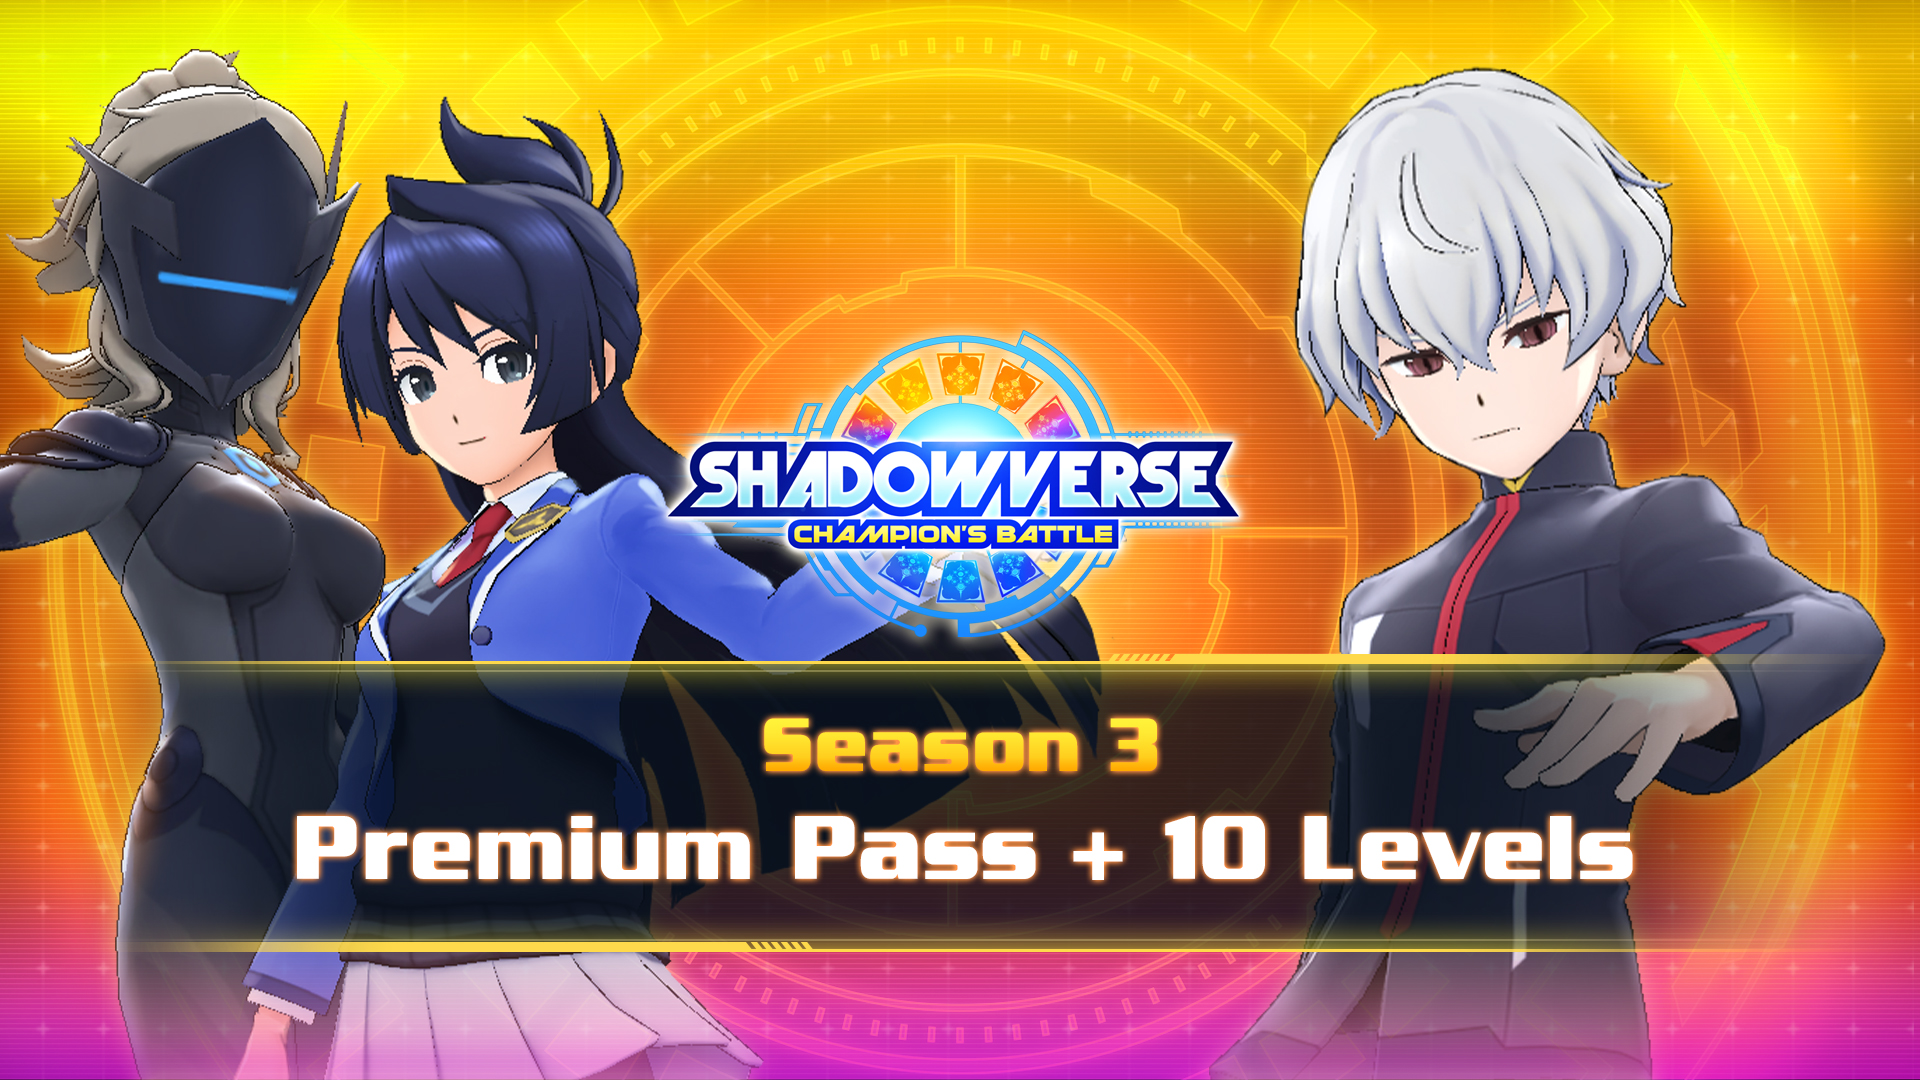 Season 3 Premium Pass + 10 Levels